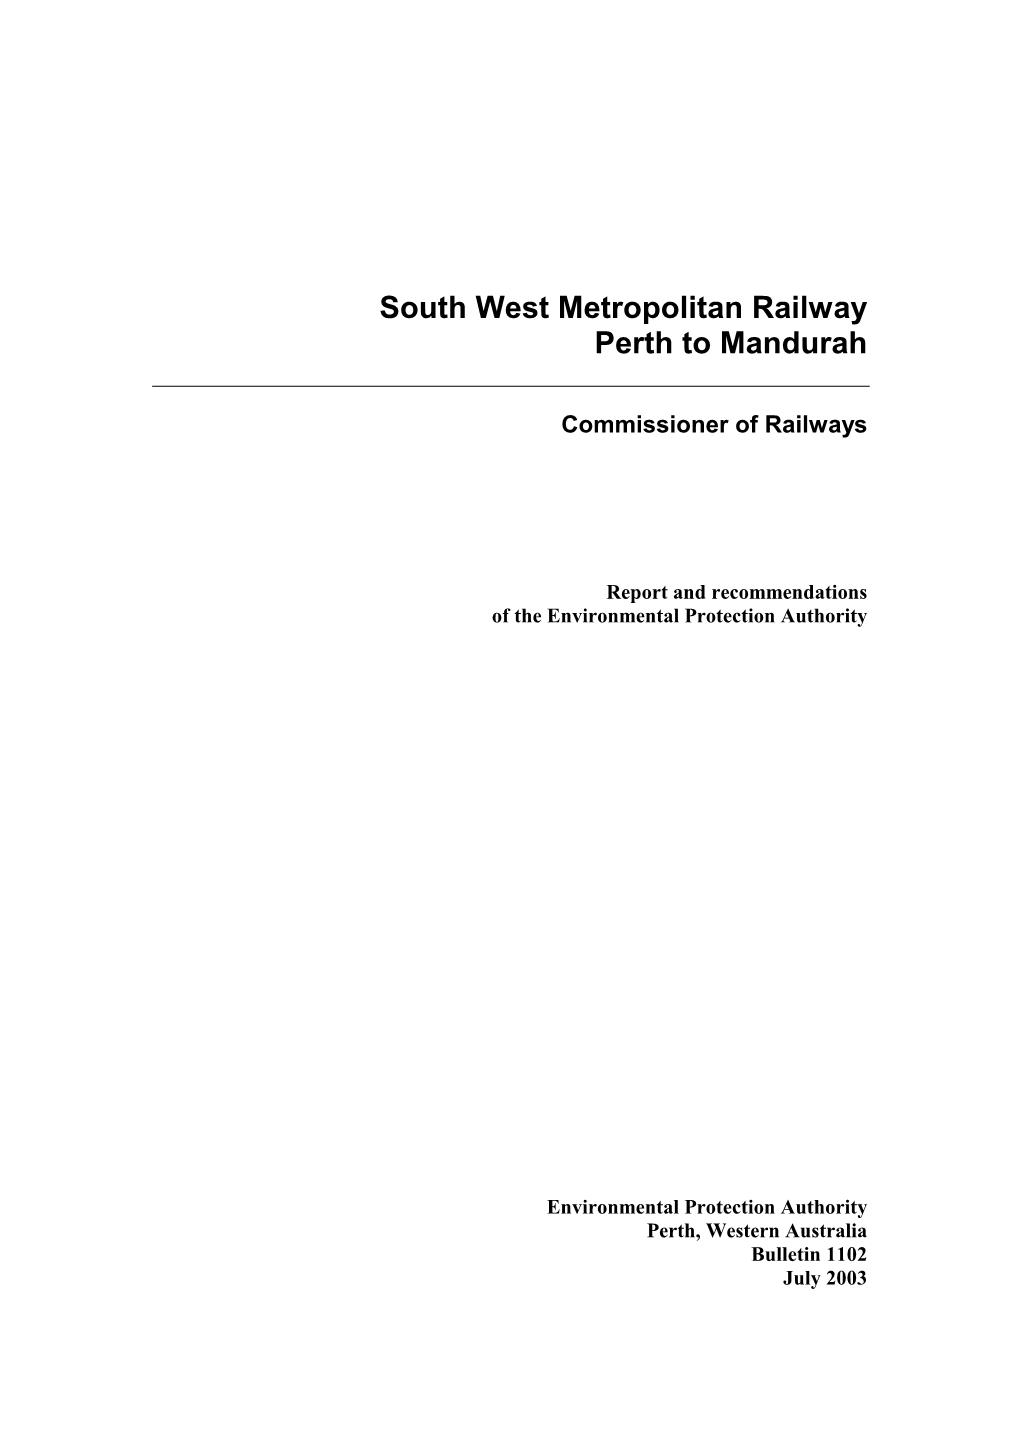 South West Metropolitan Railway Perth to Mandurah